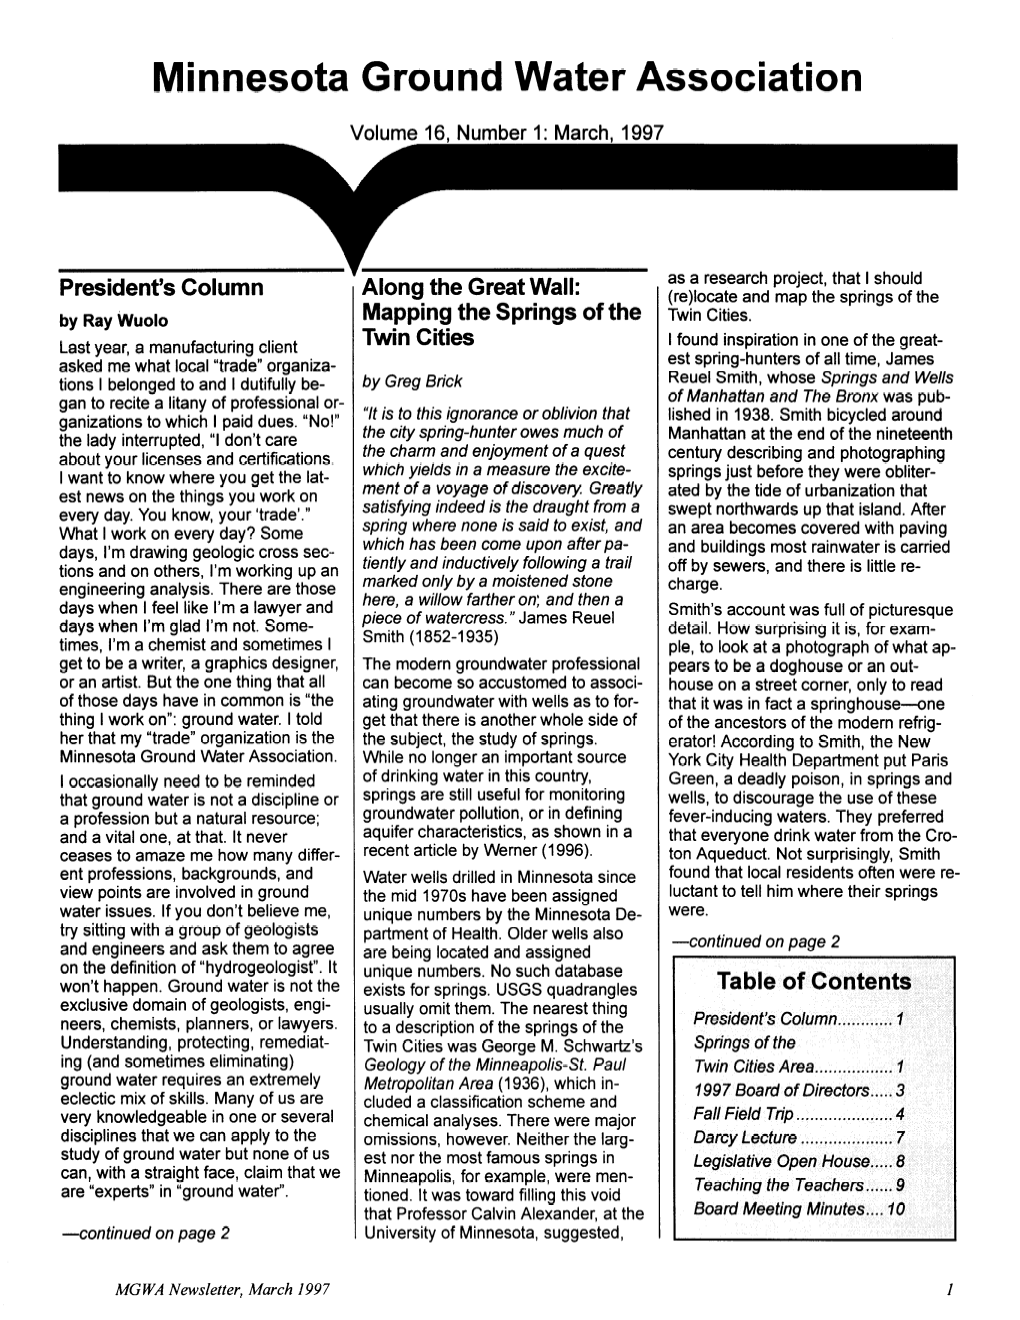 MGWA Newsletter, March 1997